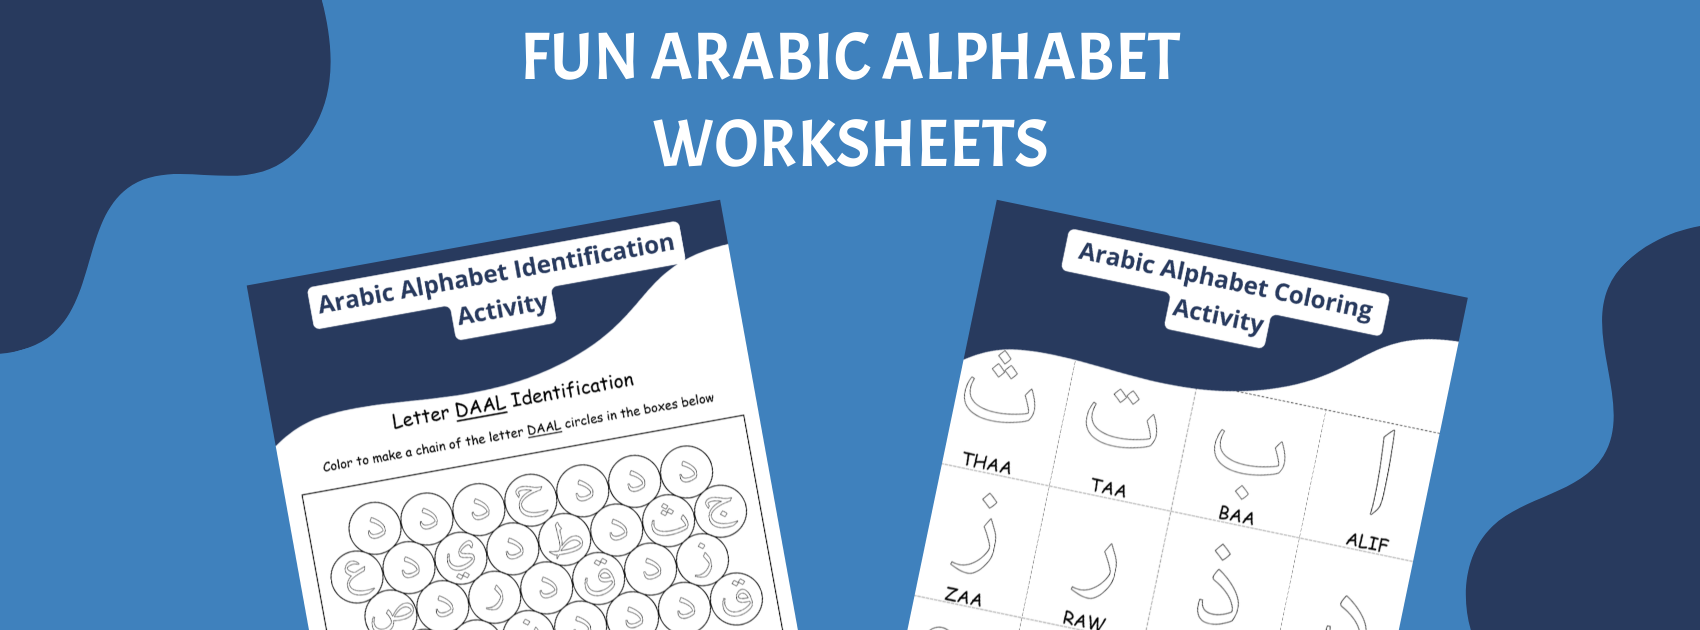 Fun Arabic Alphabet Worksheets